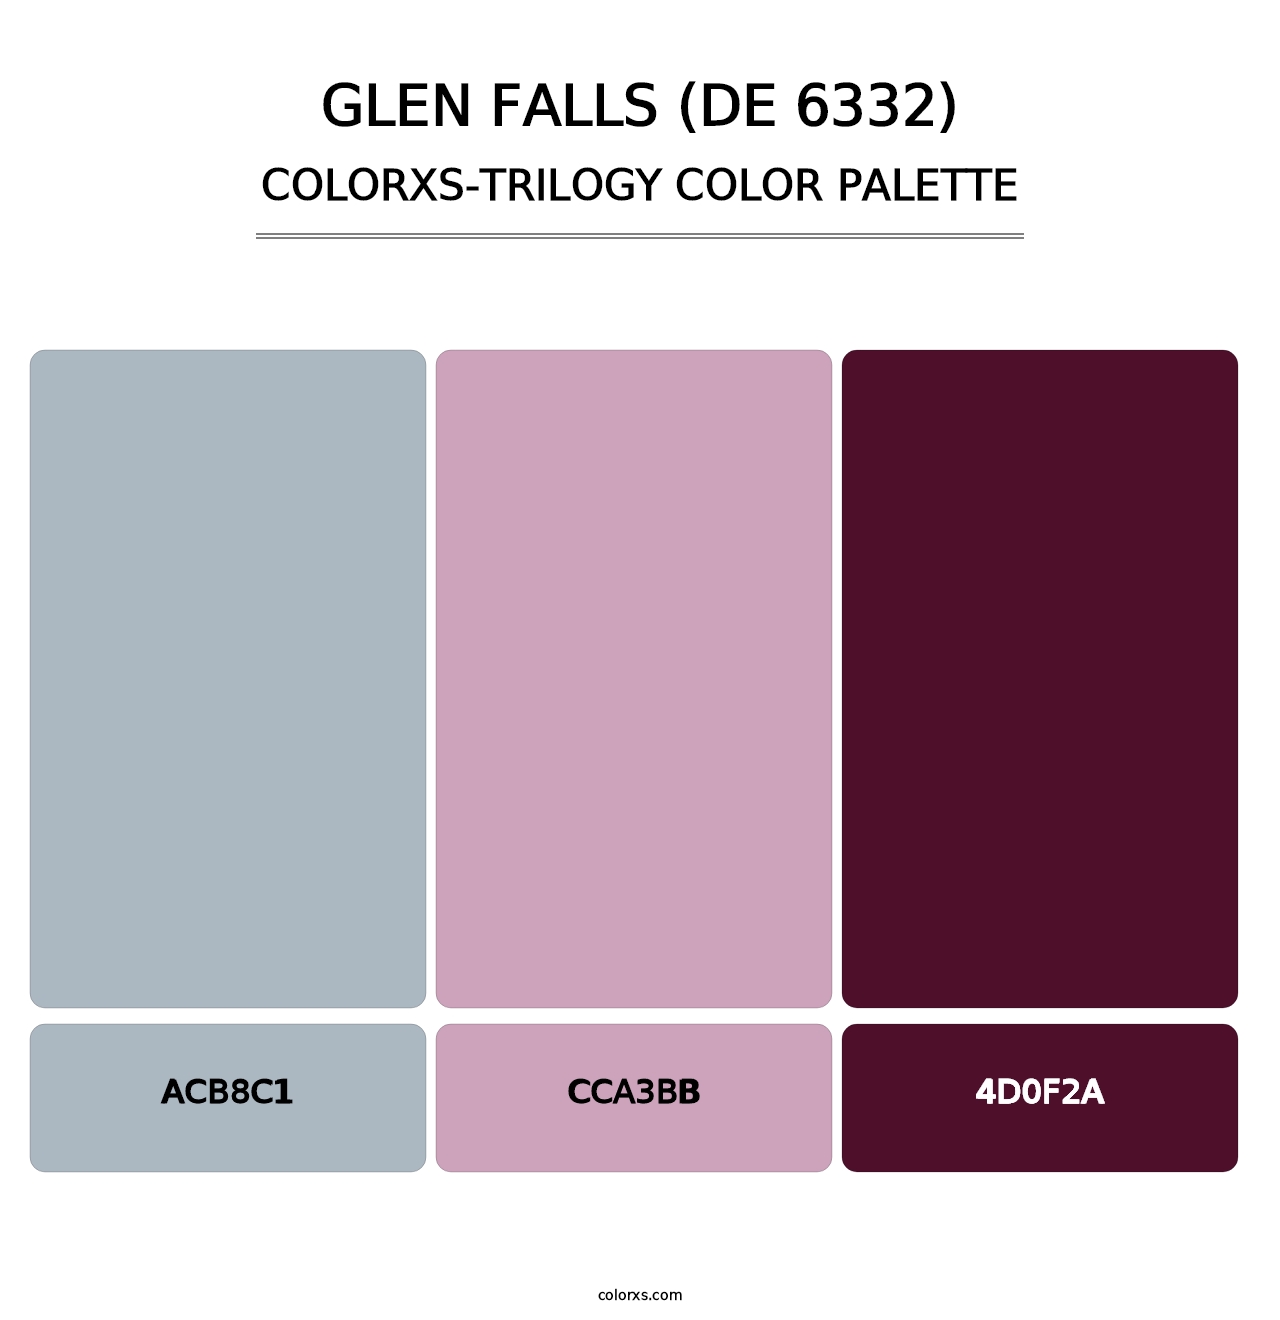 Glen Falls (DE 6332) - Colorxs Trilogy Palette